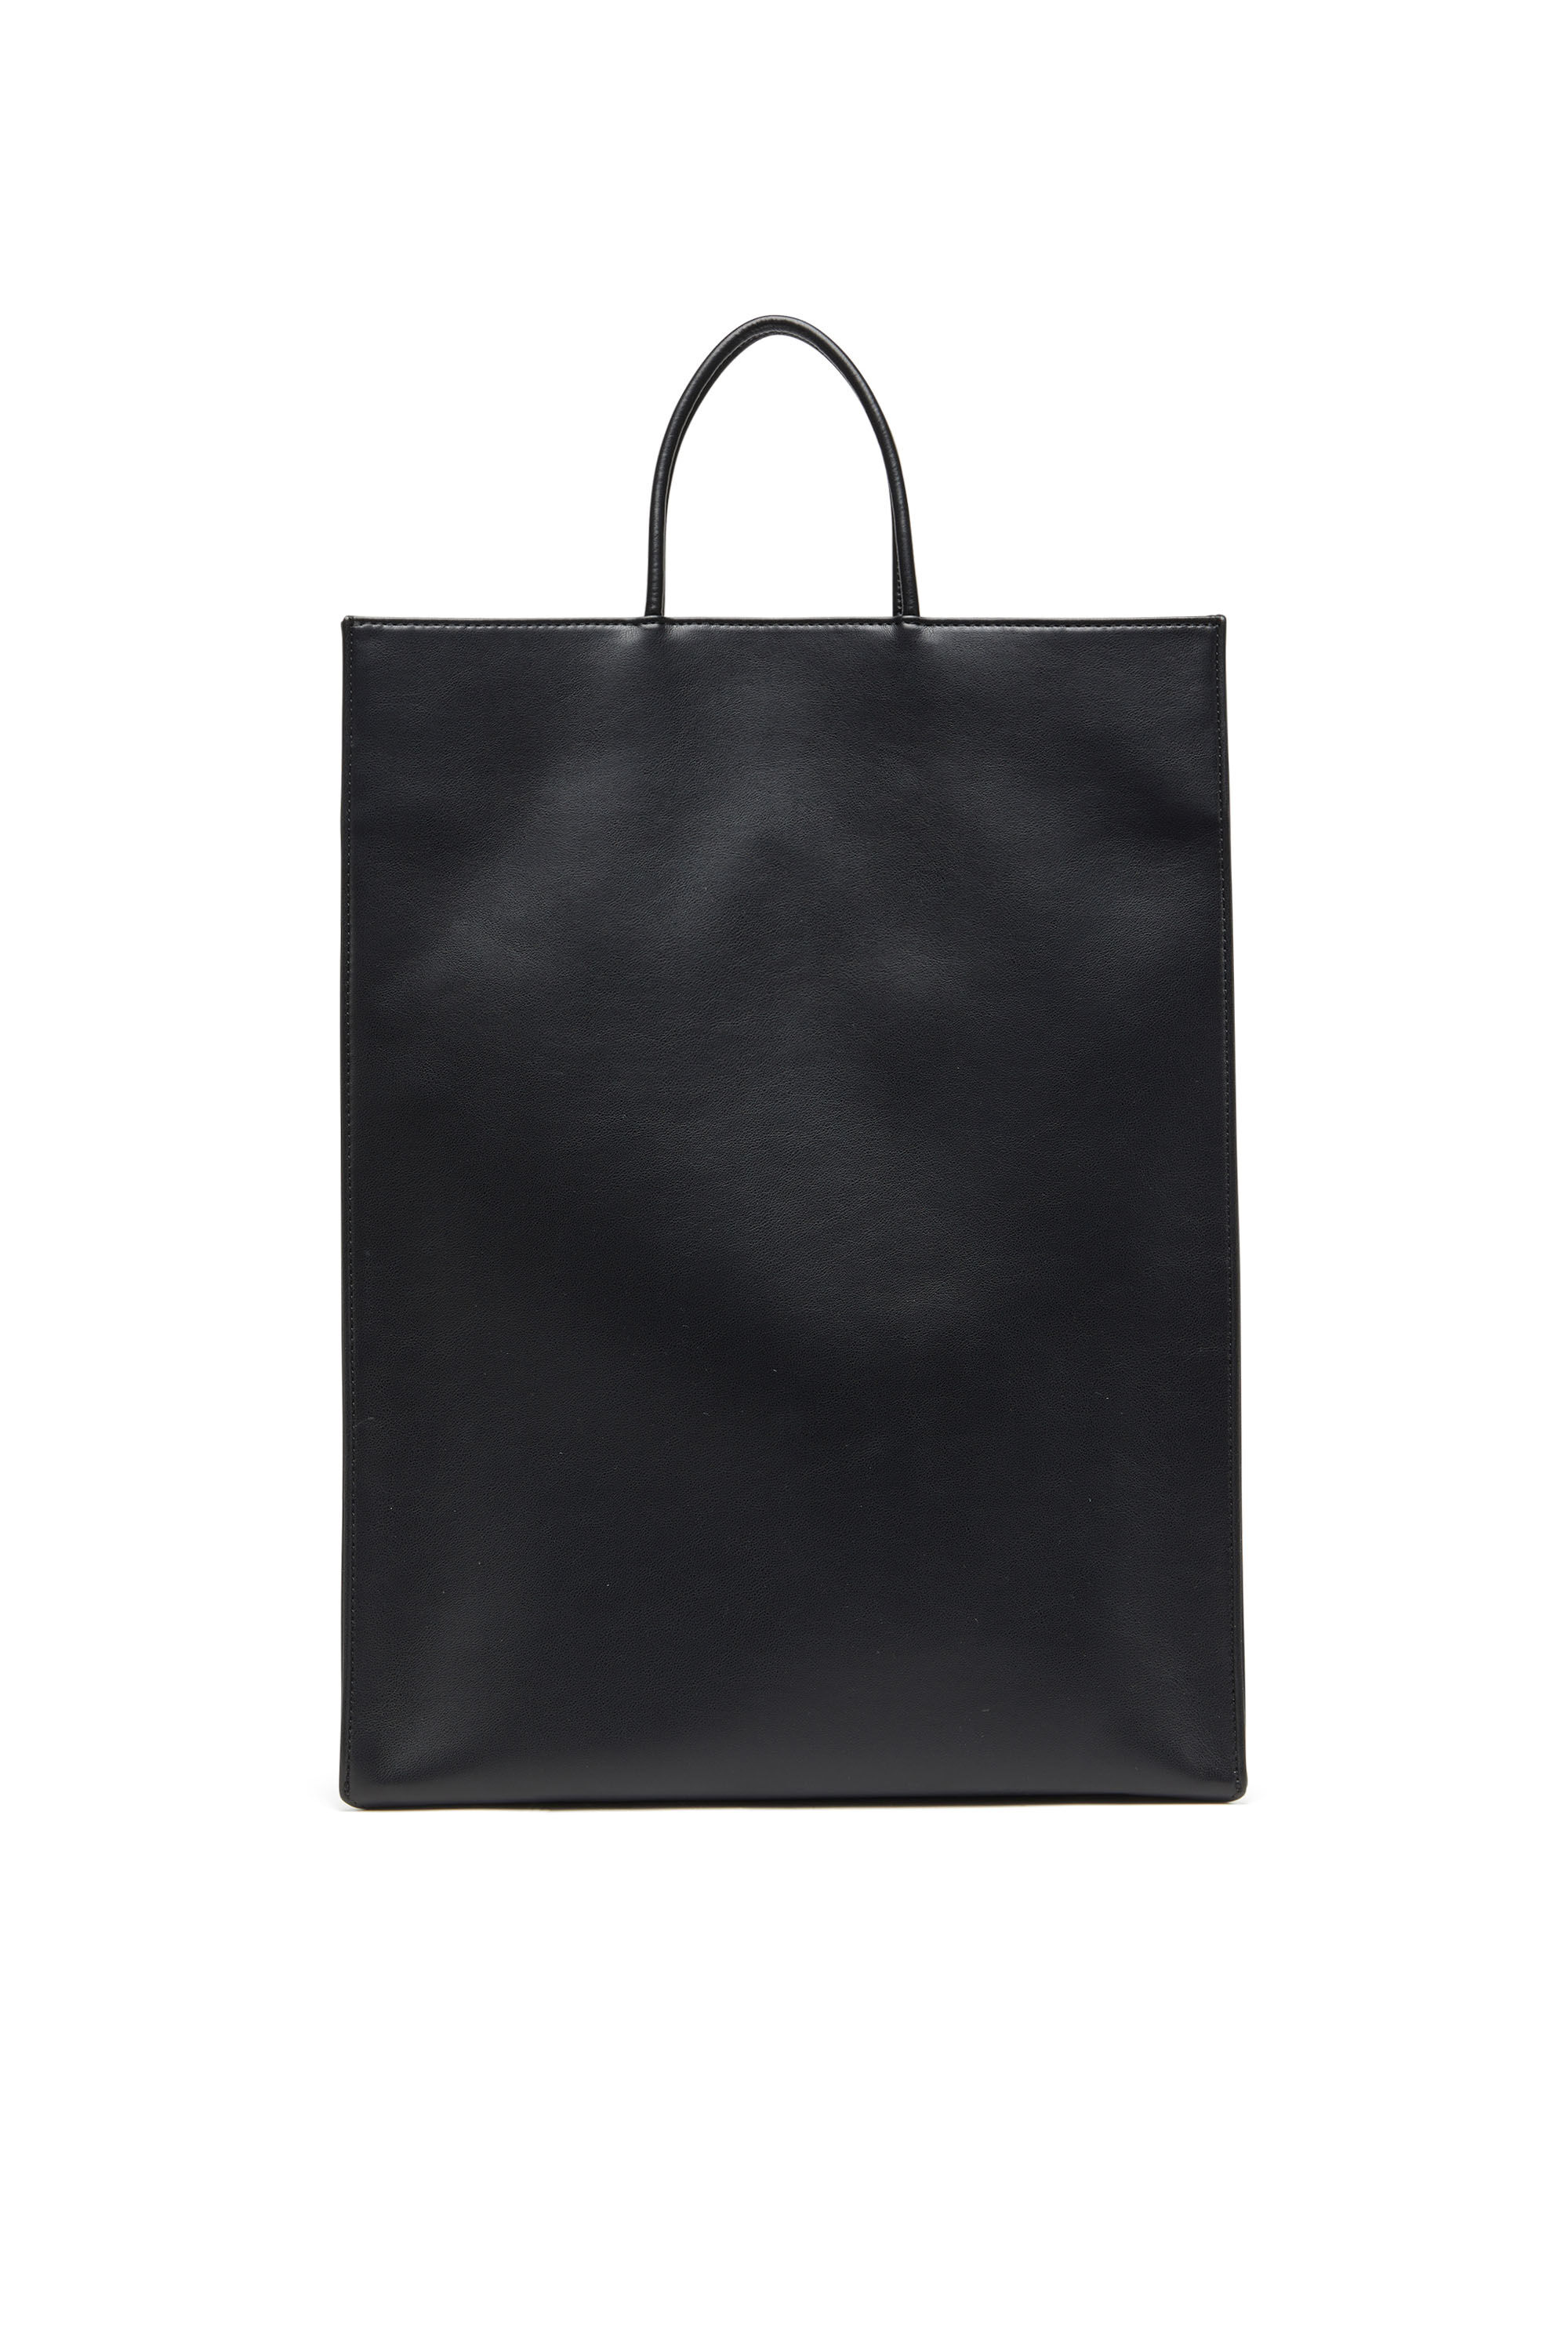 Women's Dsl 3D L-Large PU tote bag with embossed logo | Black | Diesel